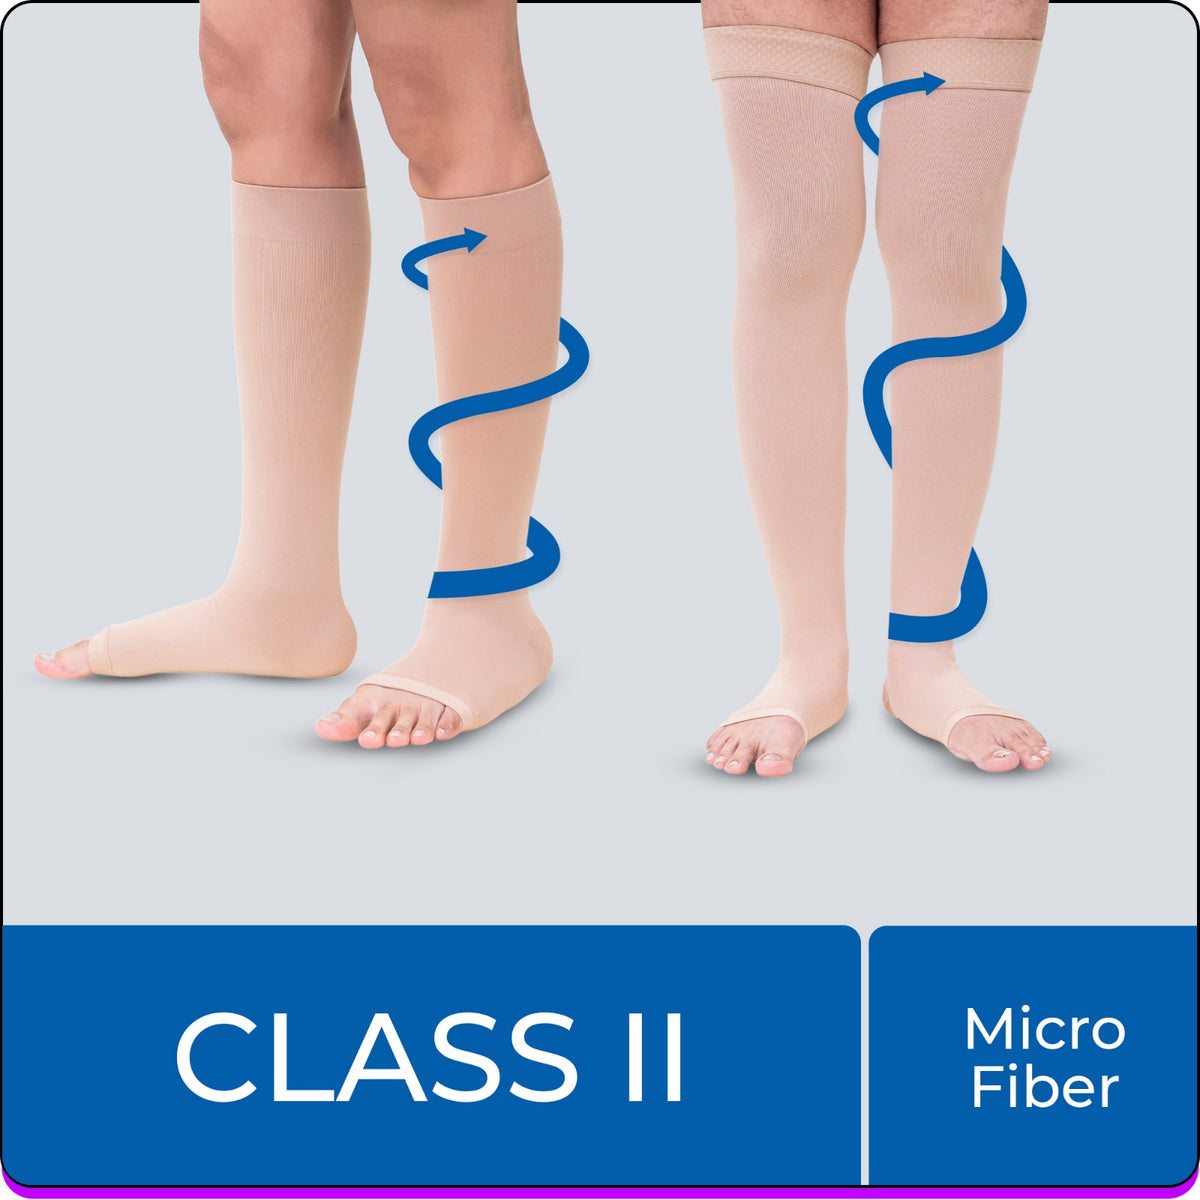 Sorgen Microfiber Medical Varicose Veins Stockings Class 2 Knee Length,  Model Name/Number: 9321102110 at Rs 2100/pair in Mumbai